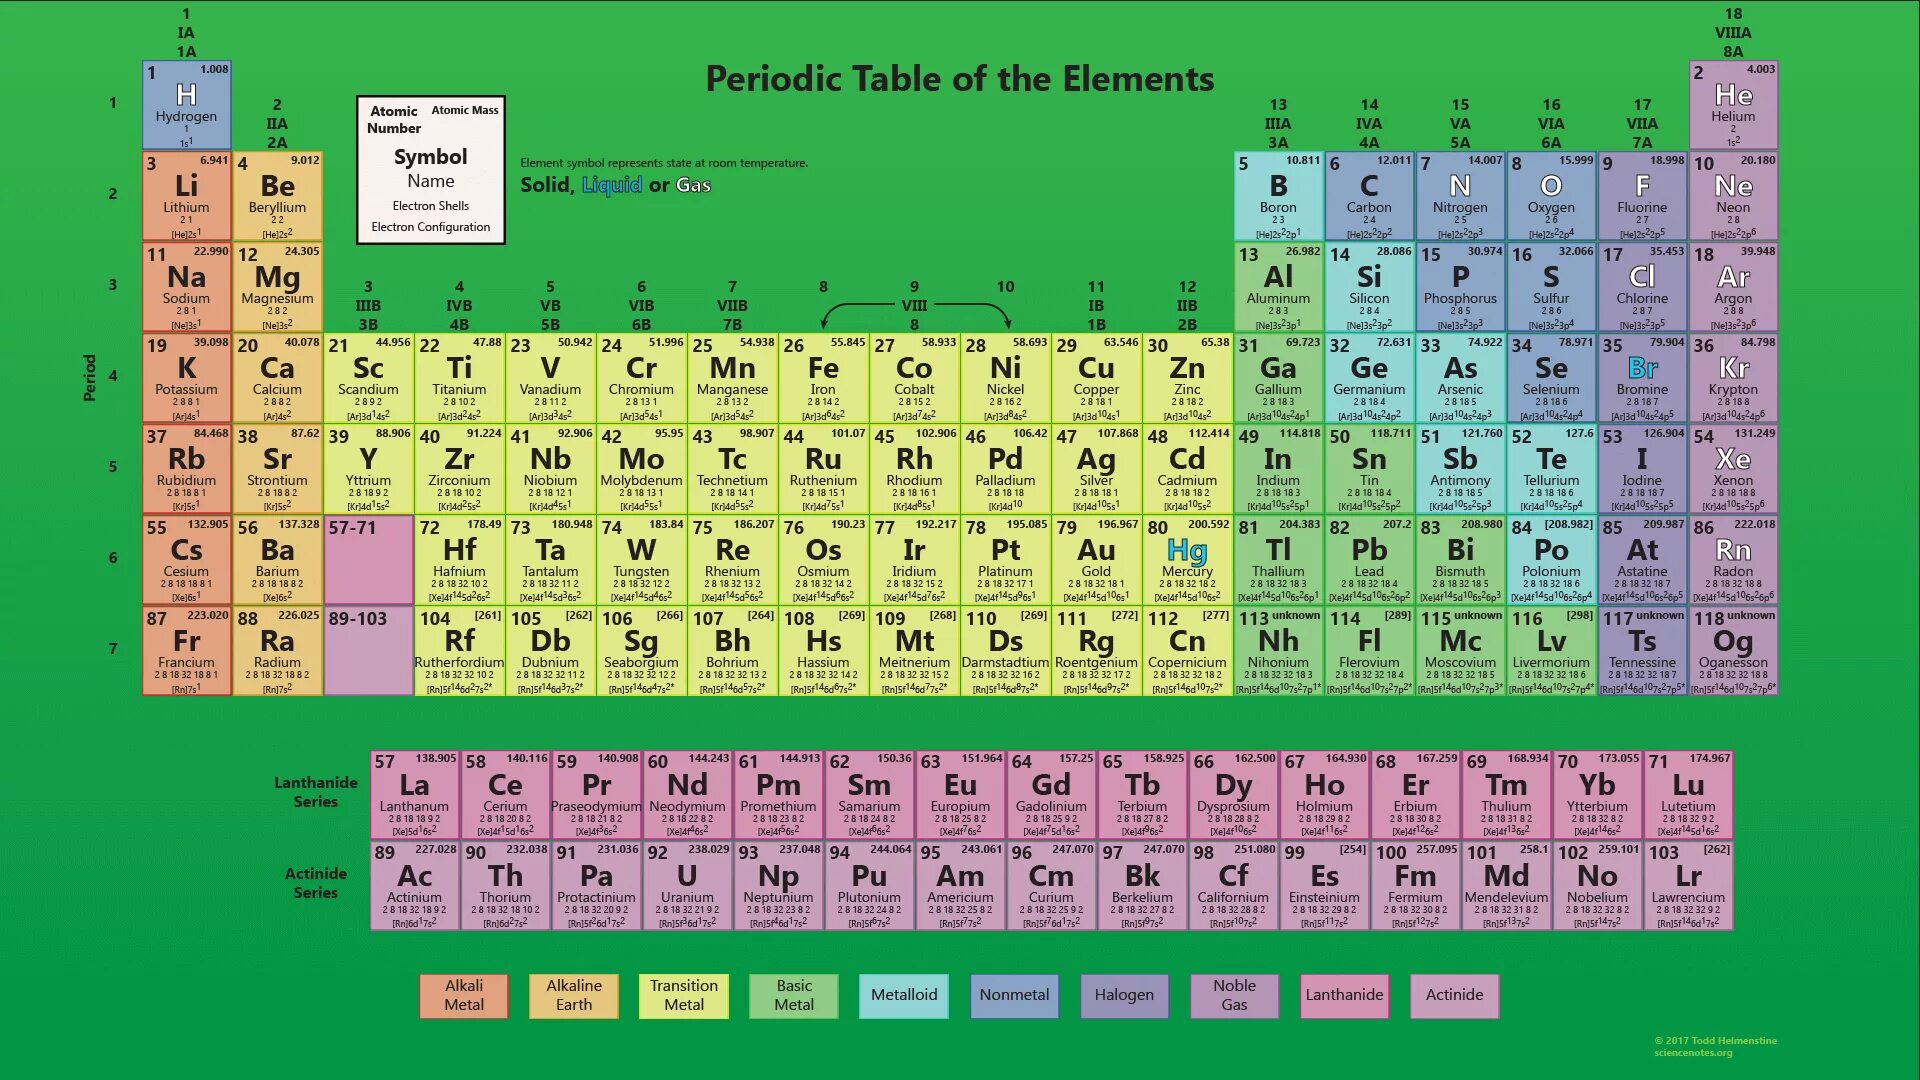 Элементы таблицы на экран. Современная таблица Менделеева 118 элементов. Таблица Менделеева Оганесон. Новая таблица Менделеева 118 химических элементов. Школьная таблица Менделеева 118 элементов.